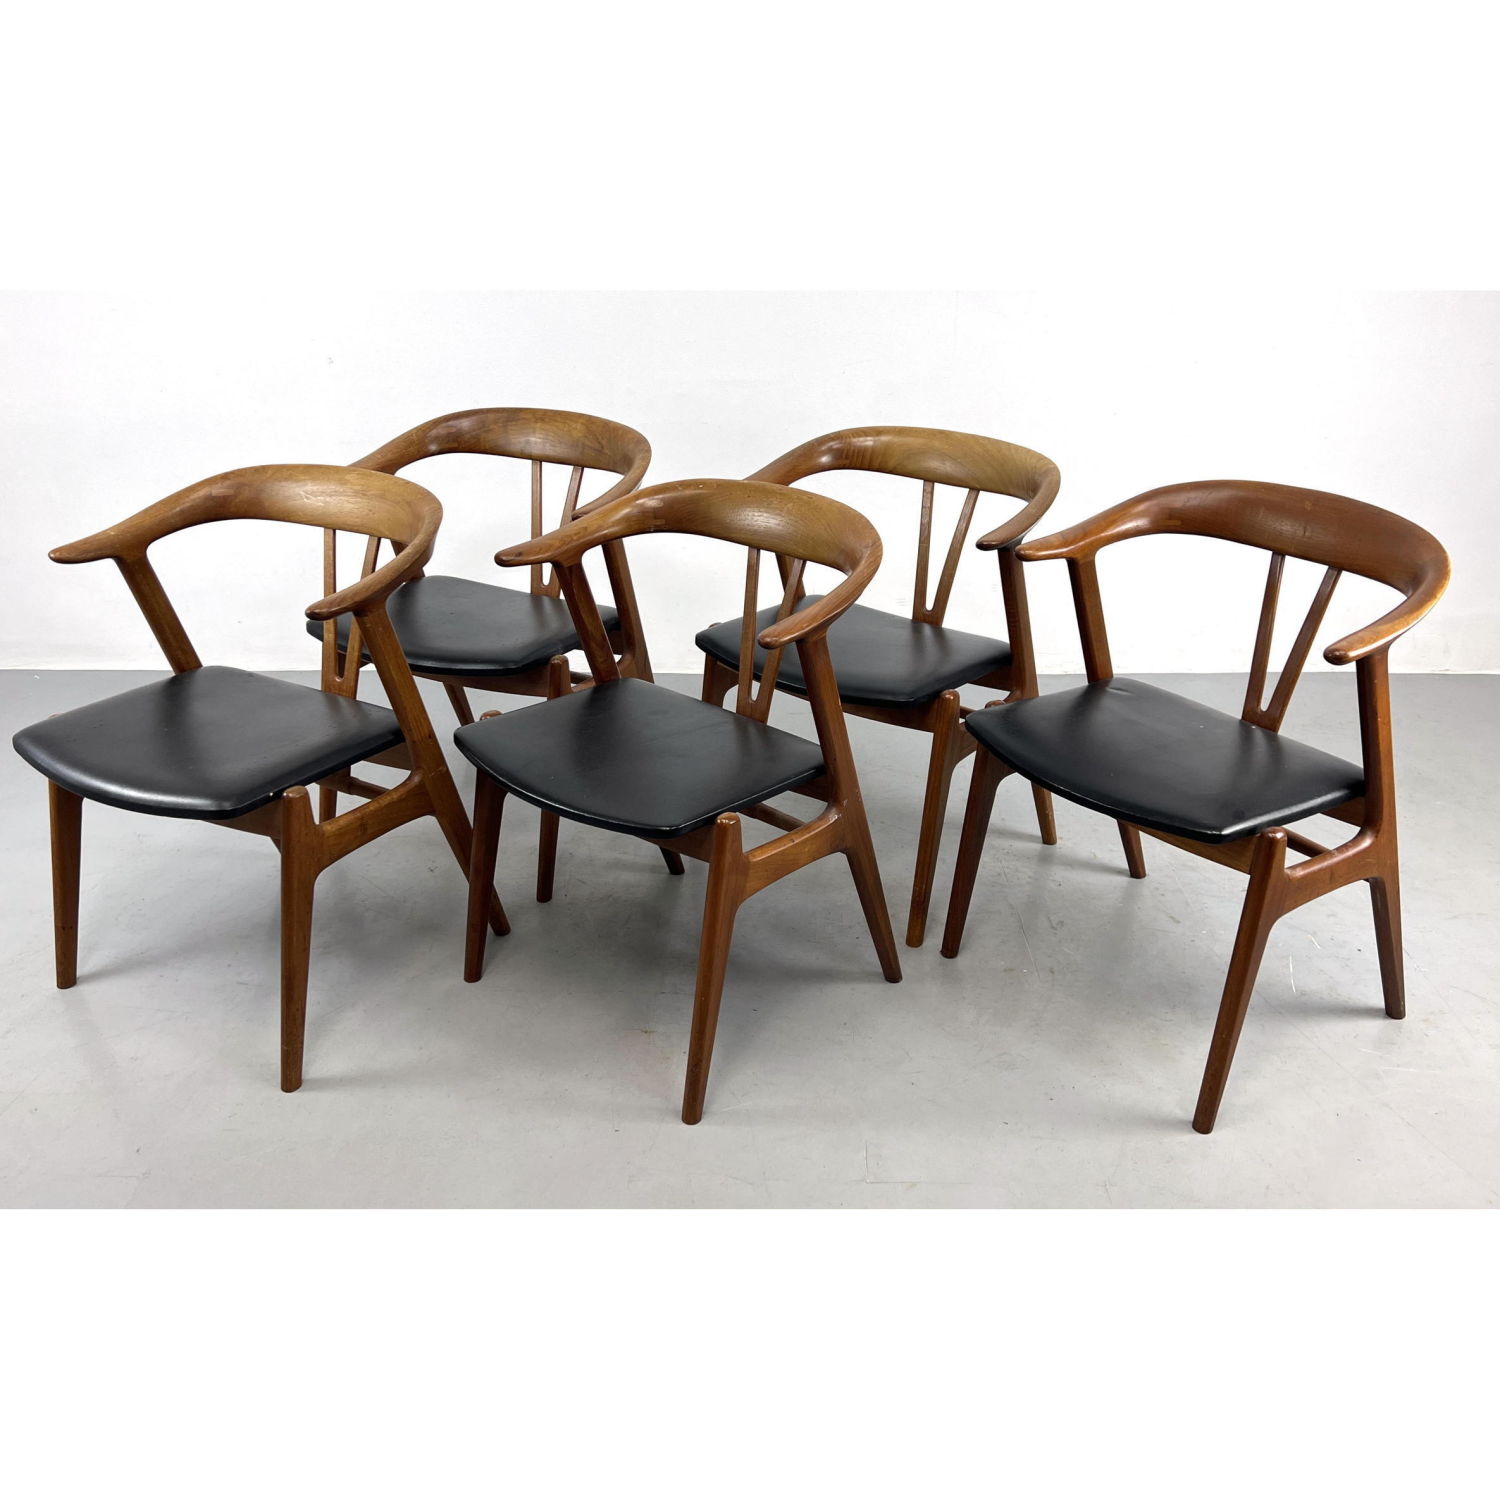 Set 5 Danish Modern Dining Chairs  2fcf79